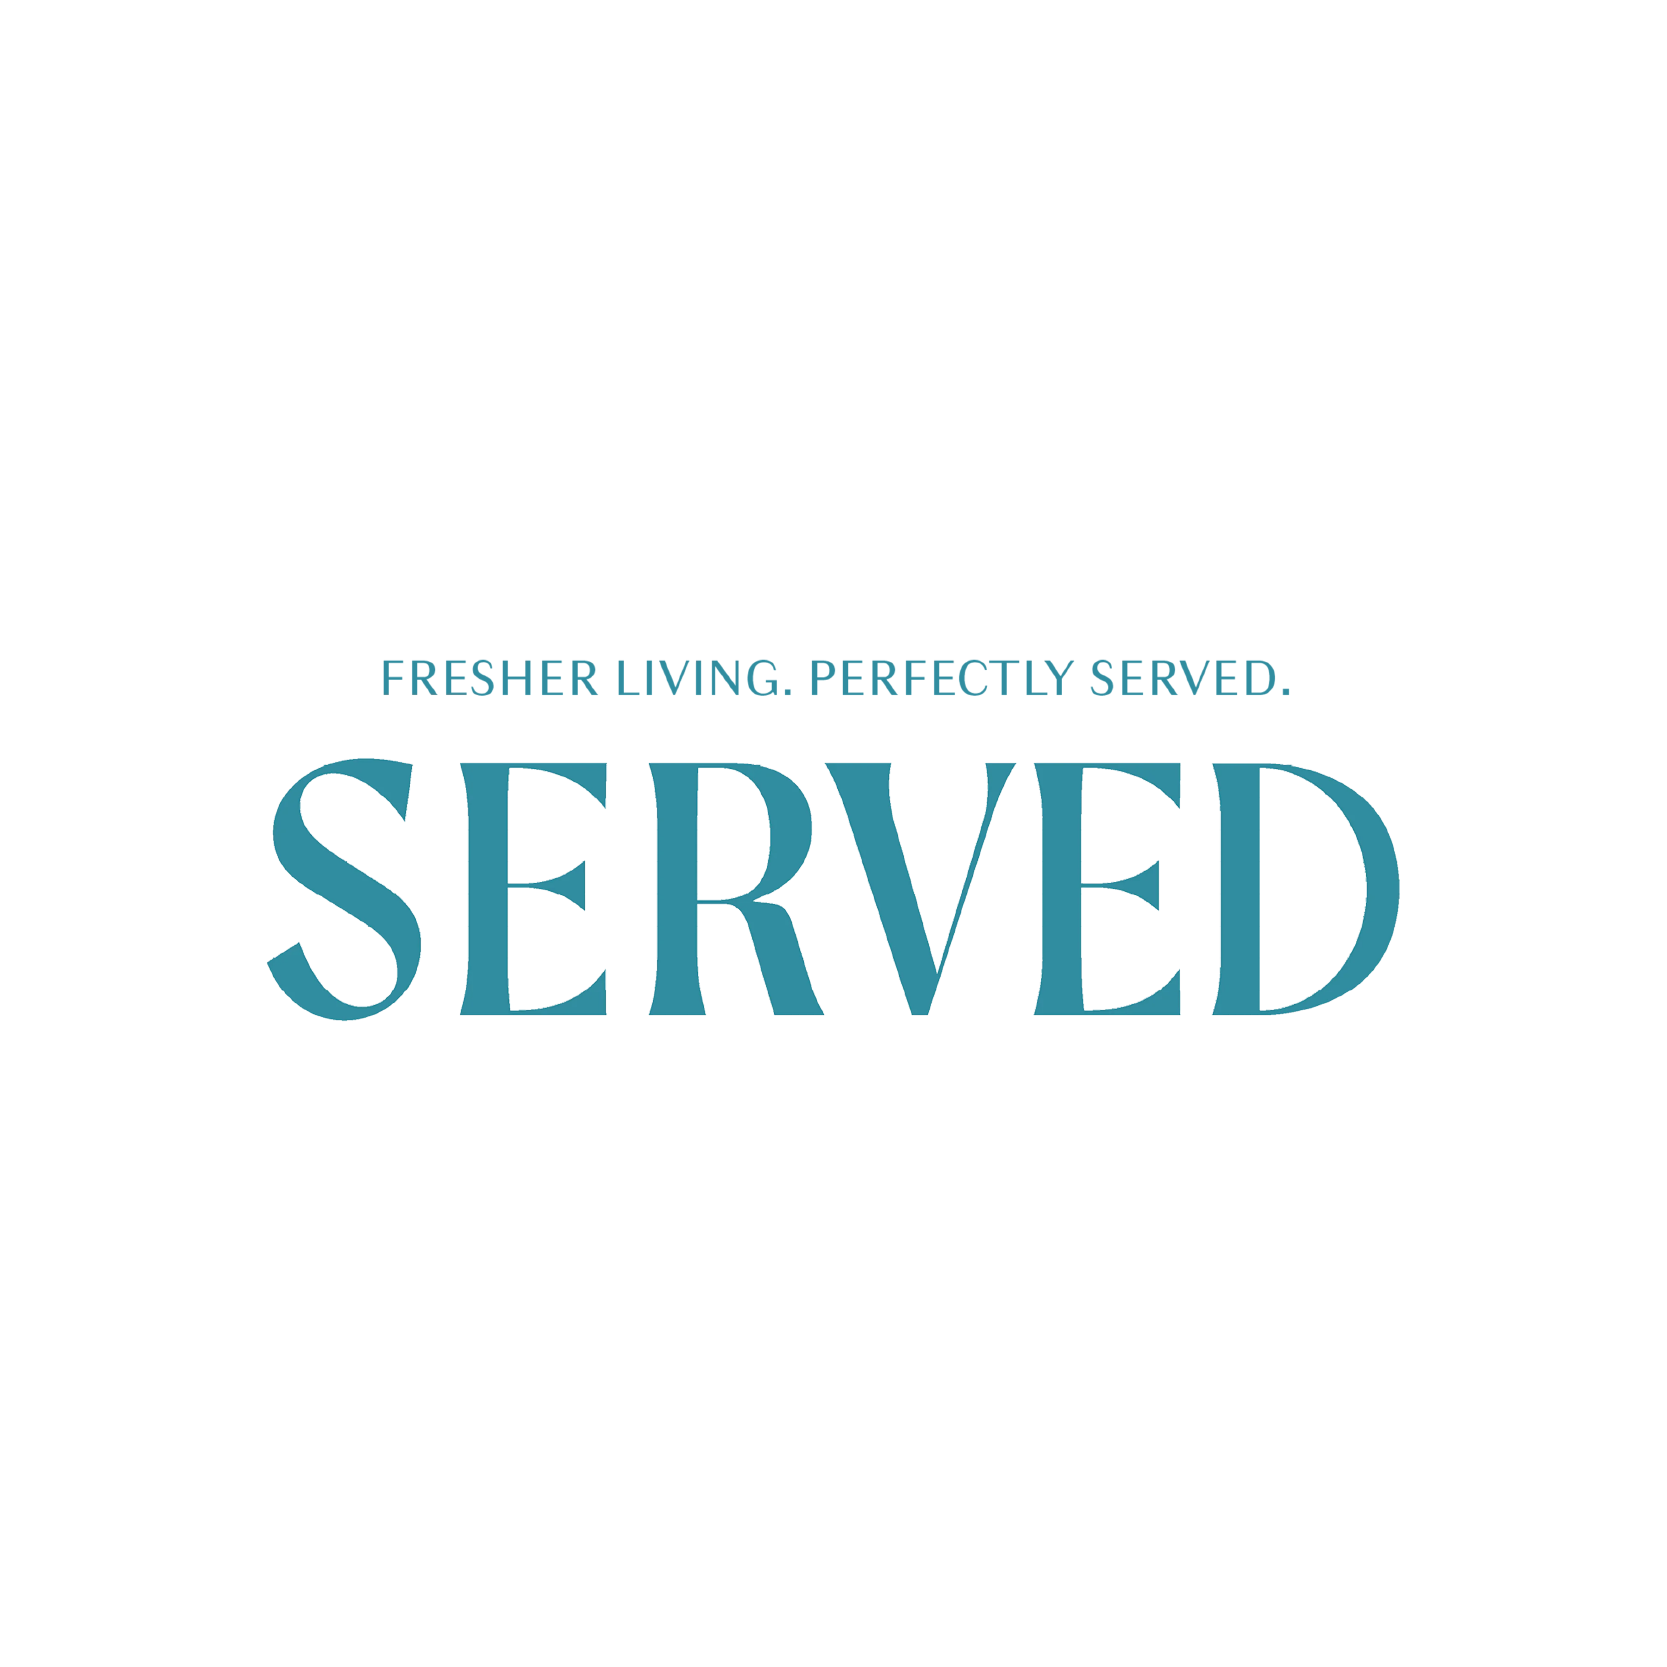 Served logo